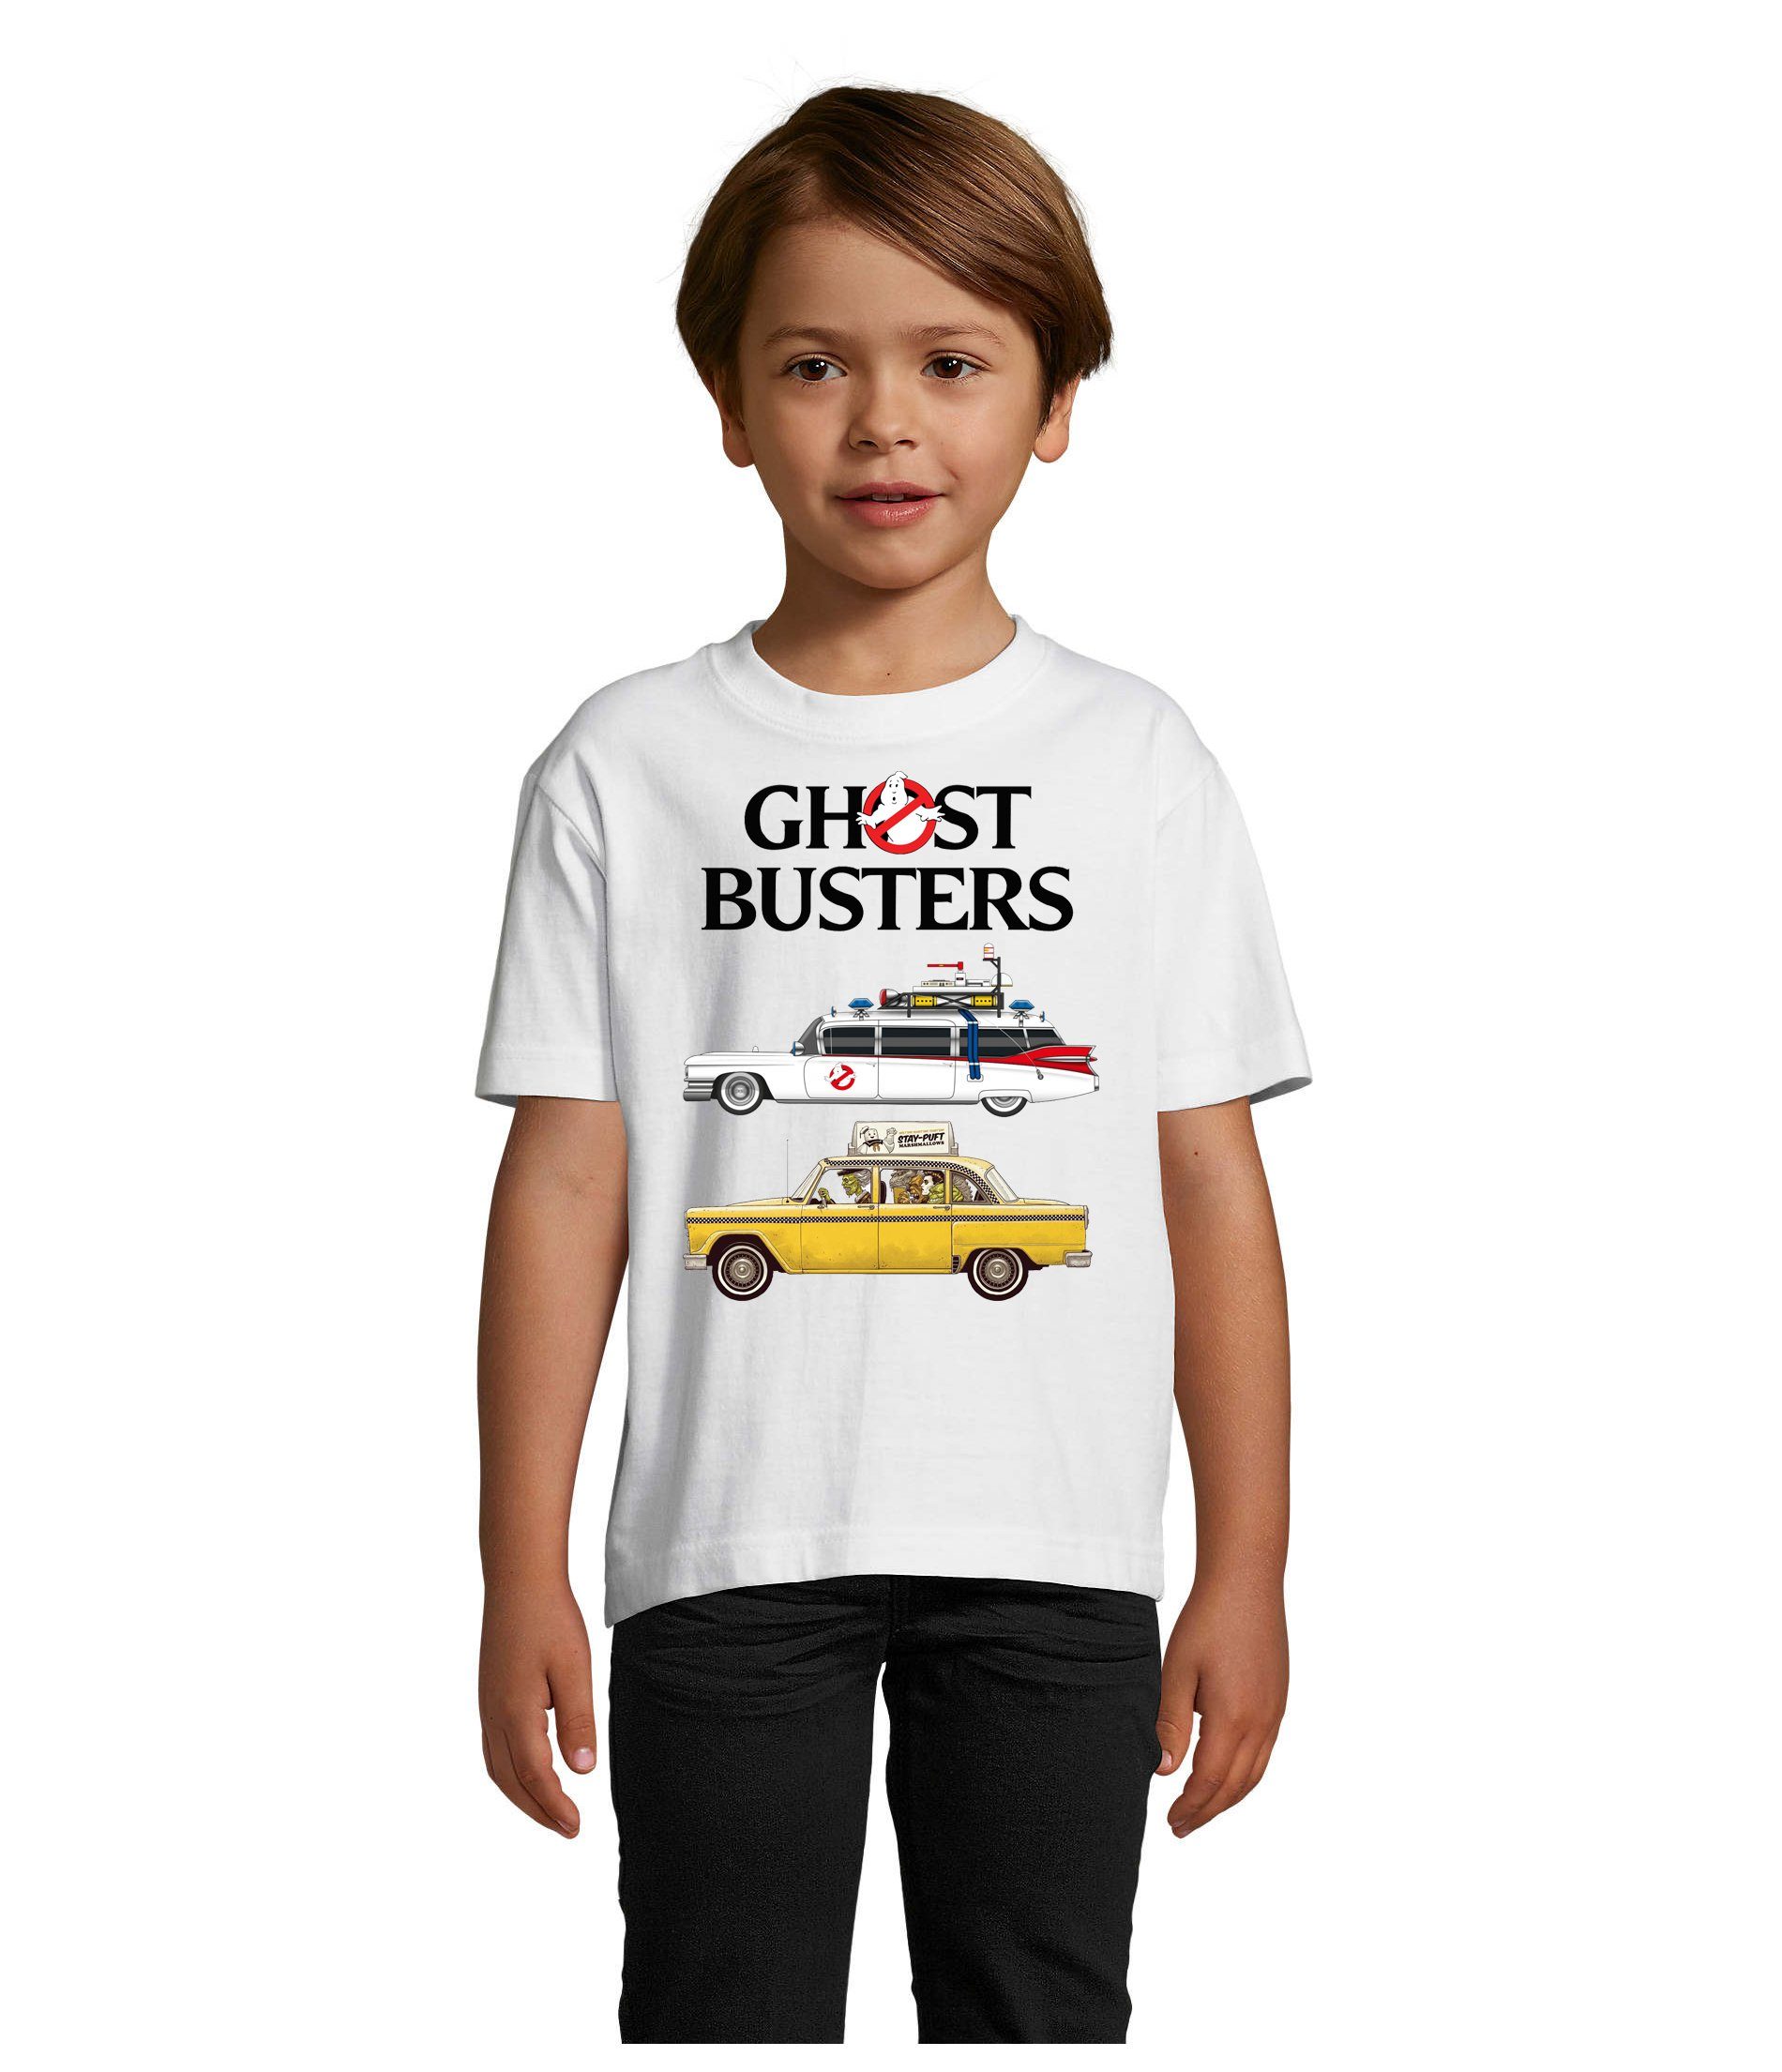 Blondie & Brownie T-Shirt Kinder Ghostbusters Cars Auto Geisterjäger Geister Film Ghost weiss